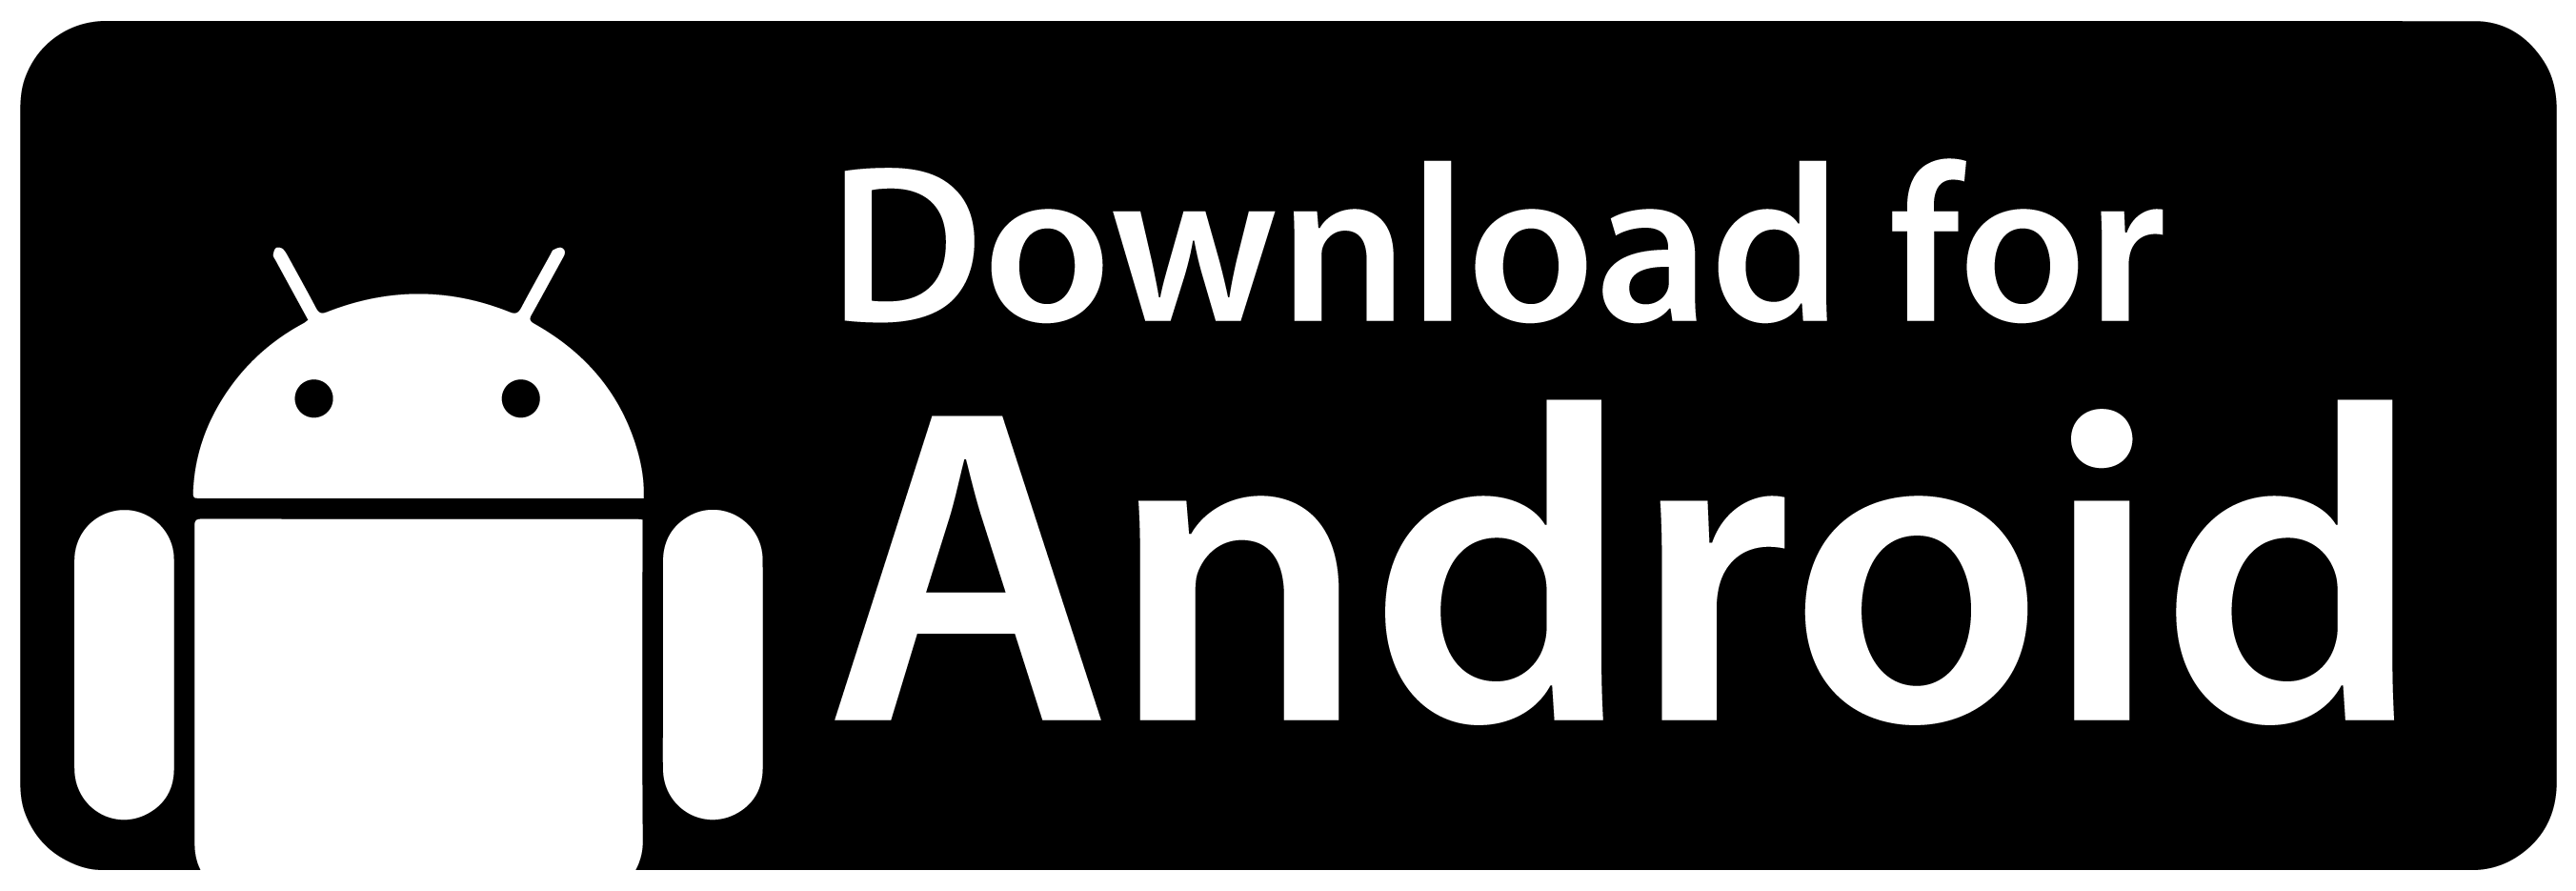 Button андроид. Доступно для Android. Логотип андроид. Иконка Android. Загрузить на андроид кнопка.